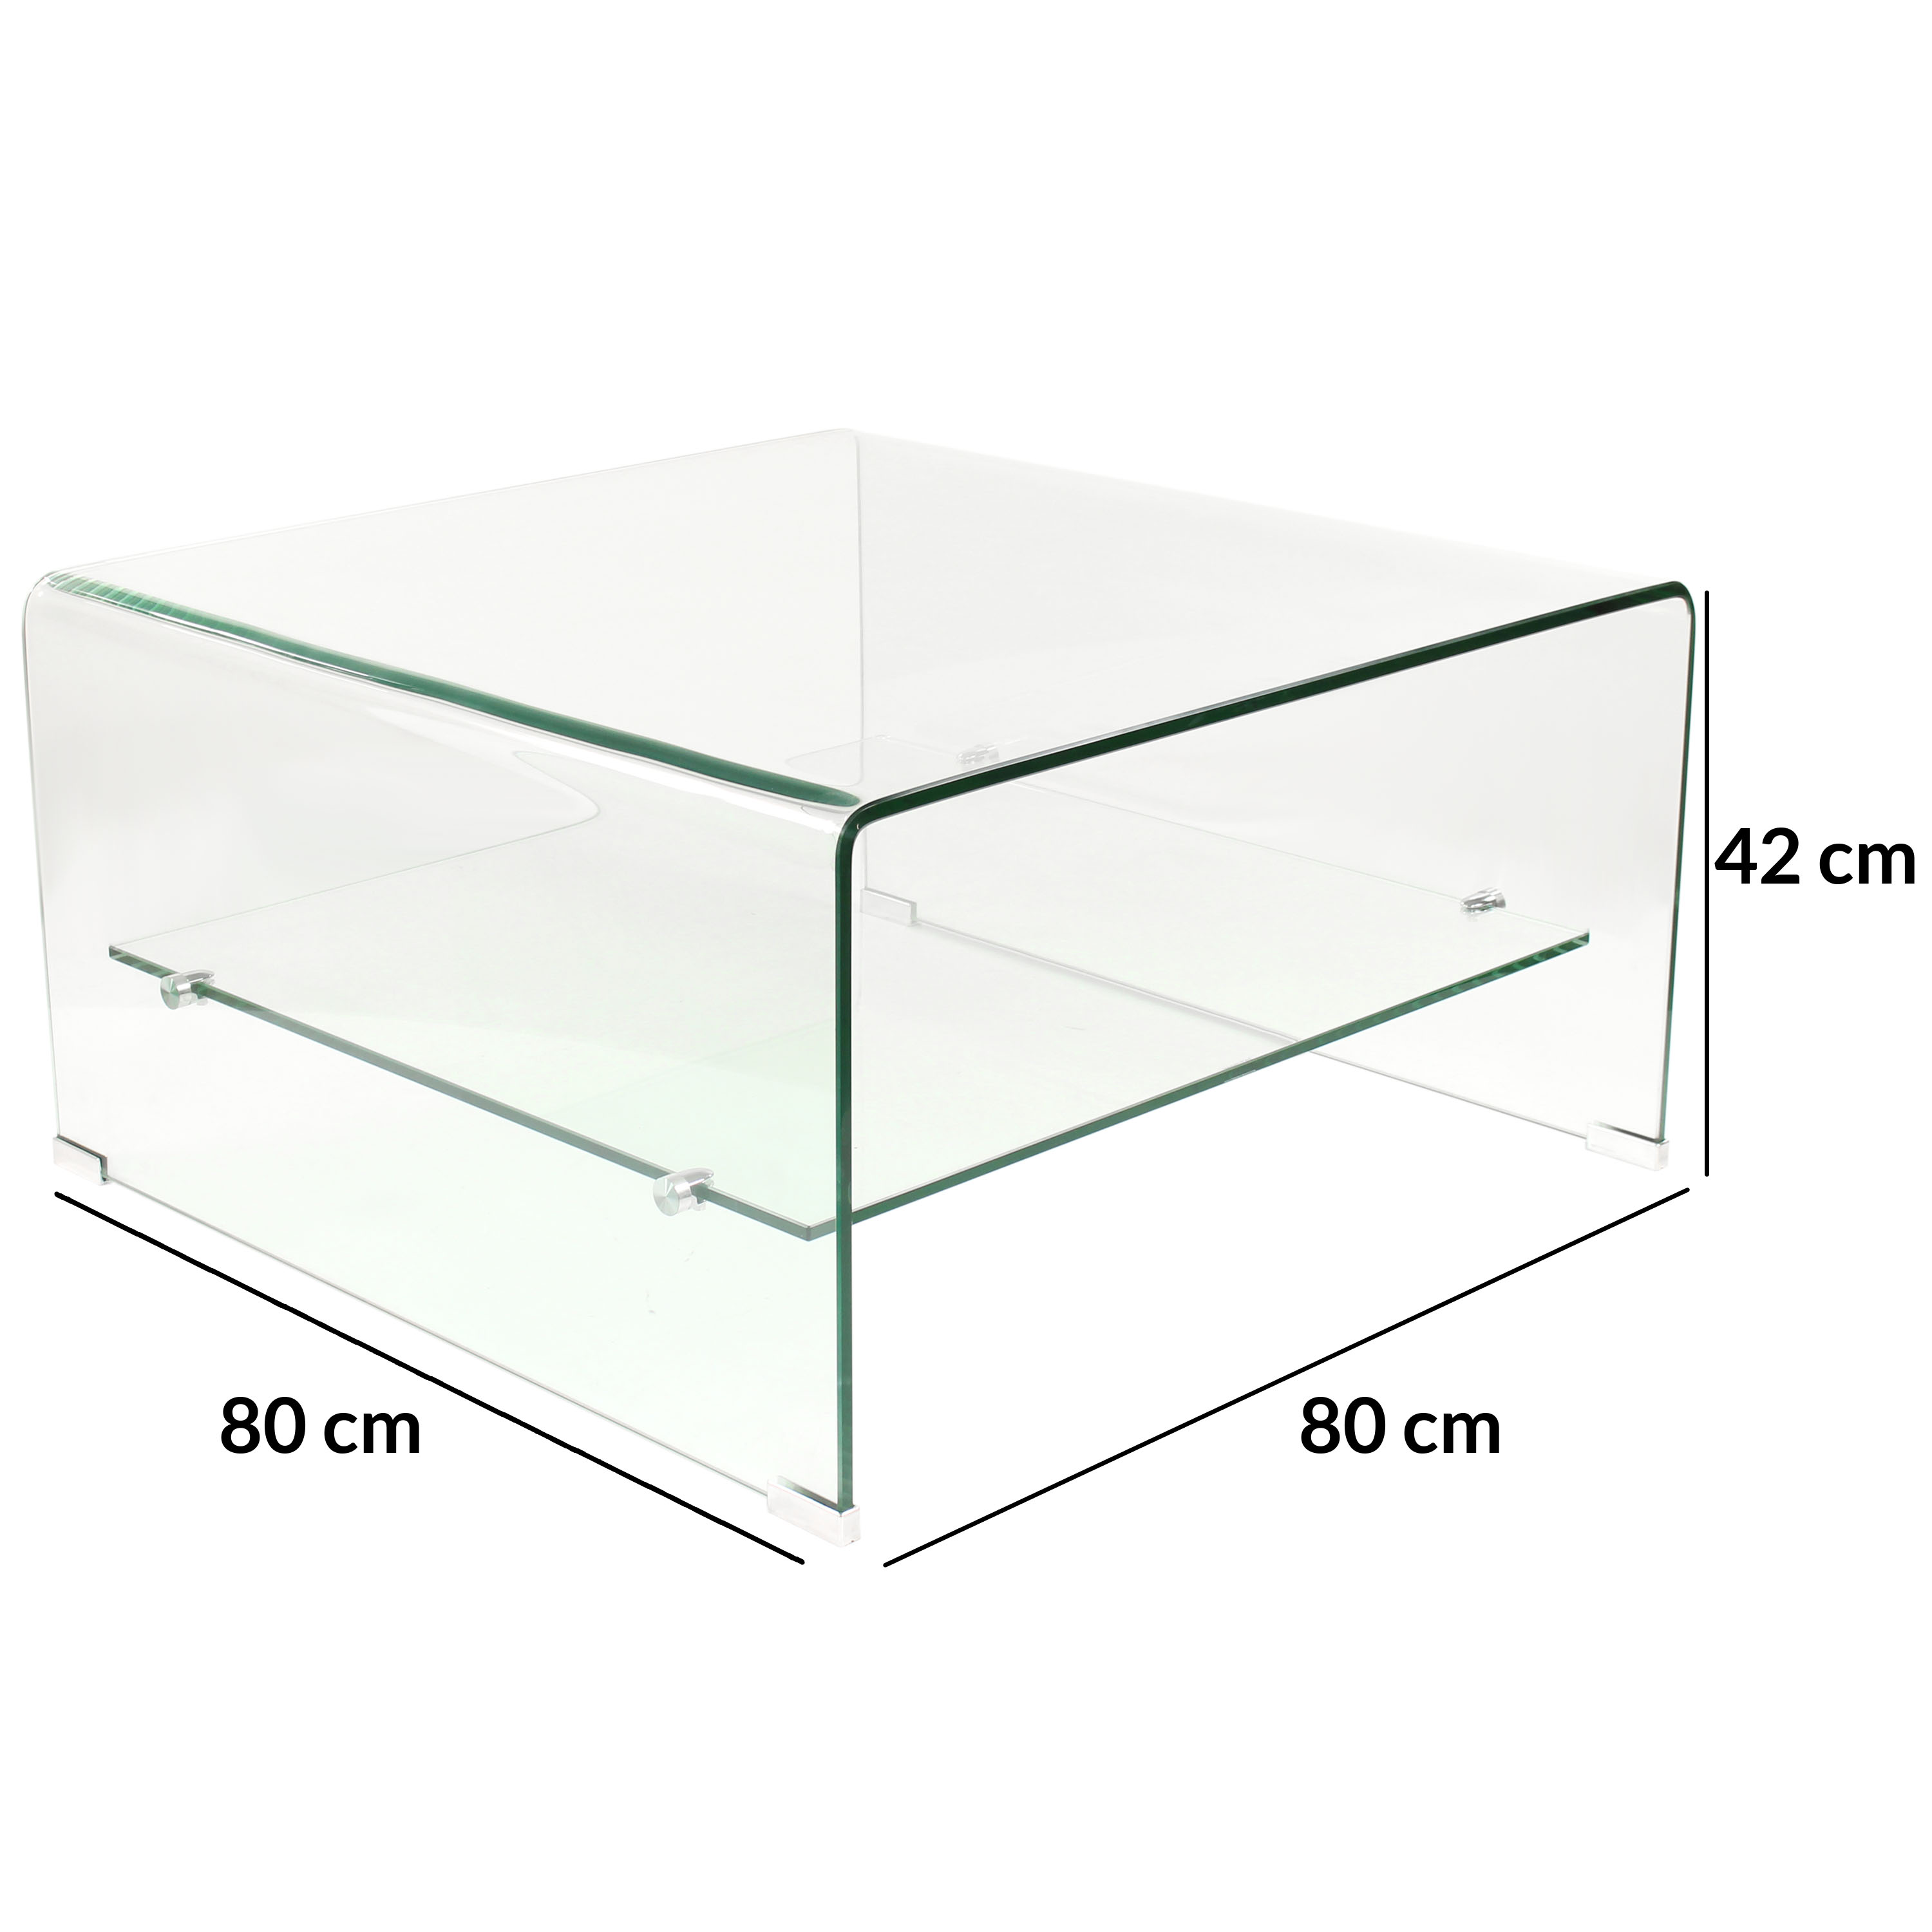 Usine22-Plateform3Table basse Design bd1585  et  80 x 80 cm -verre 12 mm